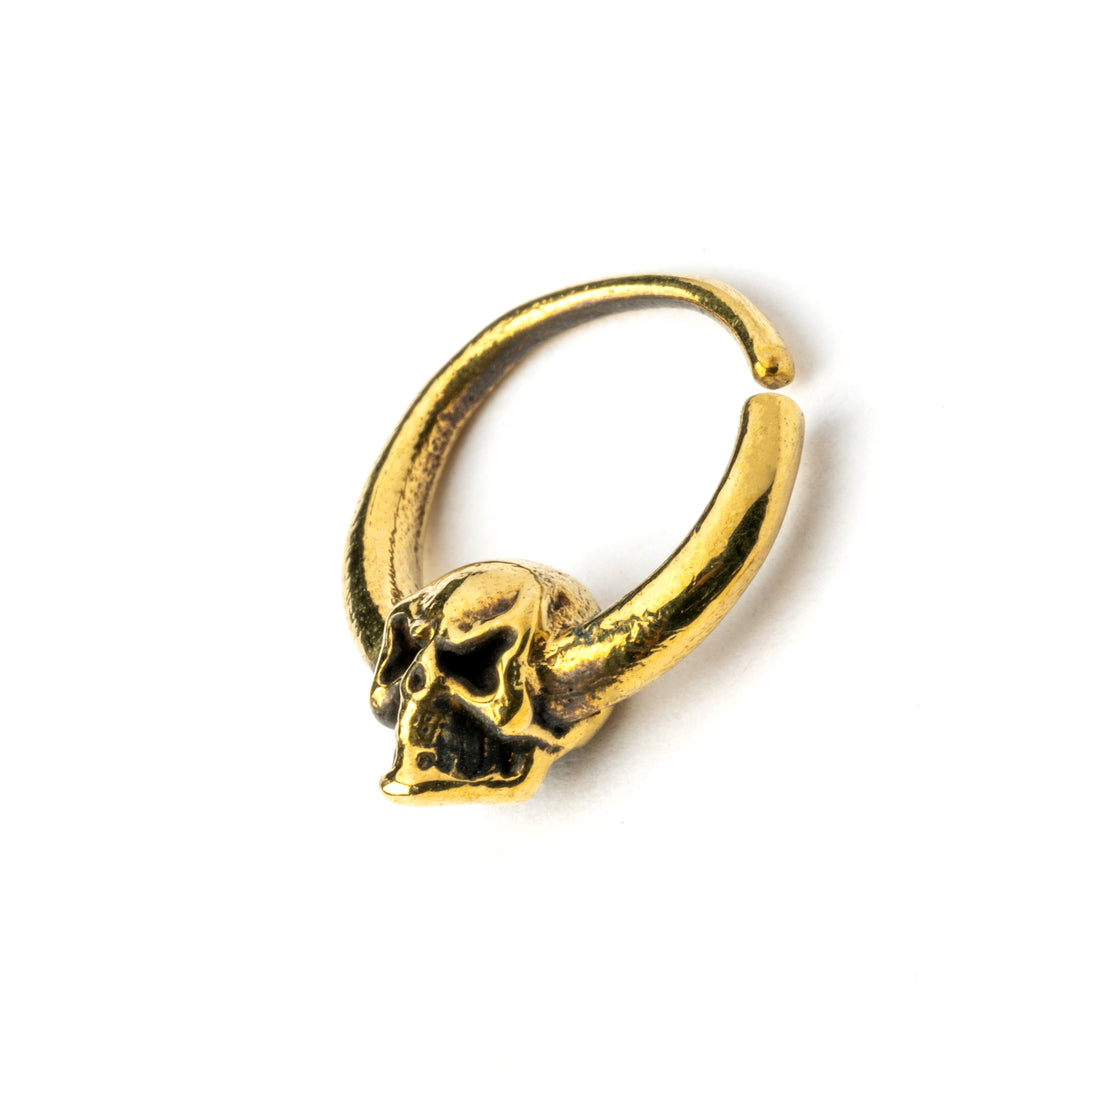 Pirate golden brass skull septum ring right side view